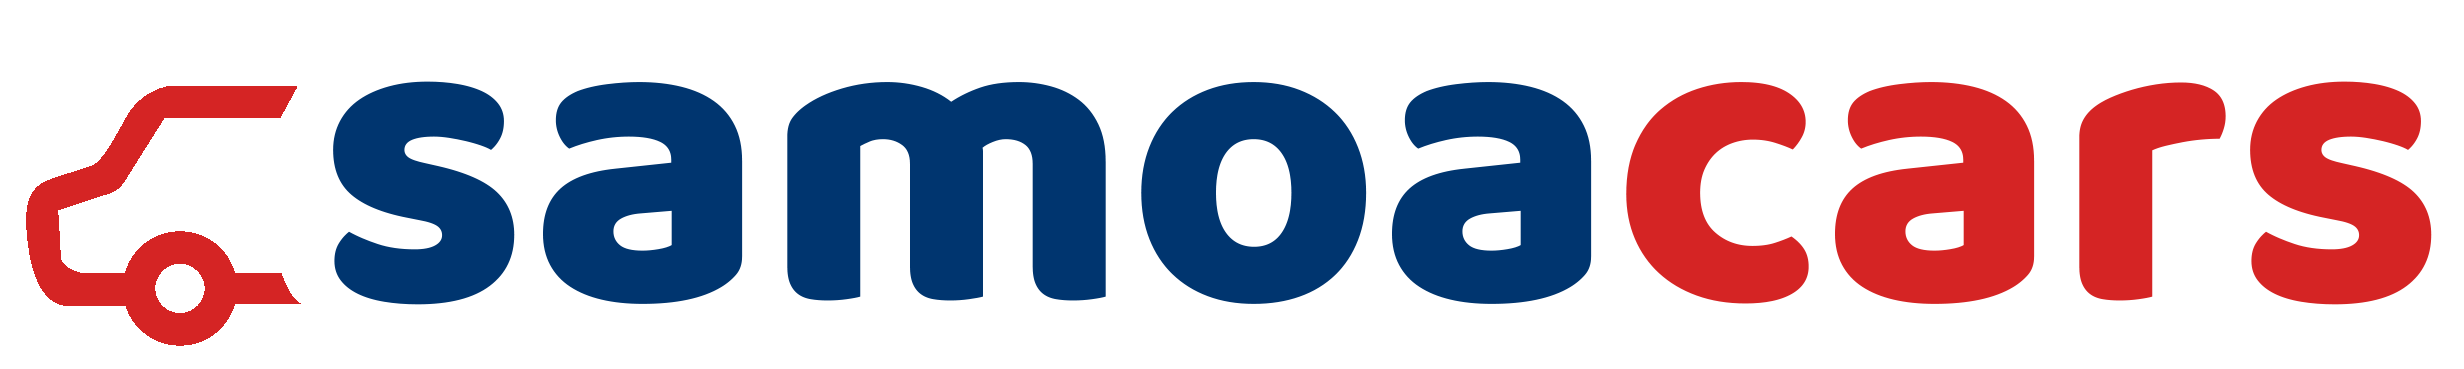 Samoacars logo